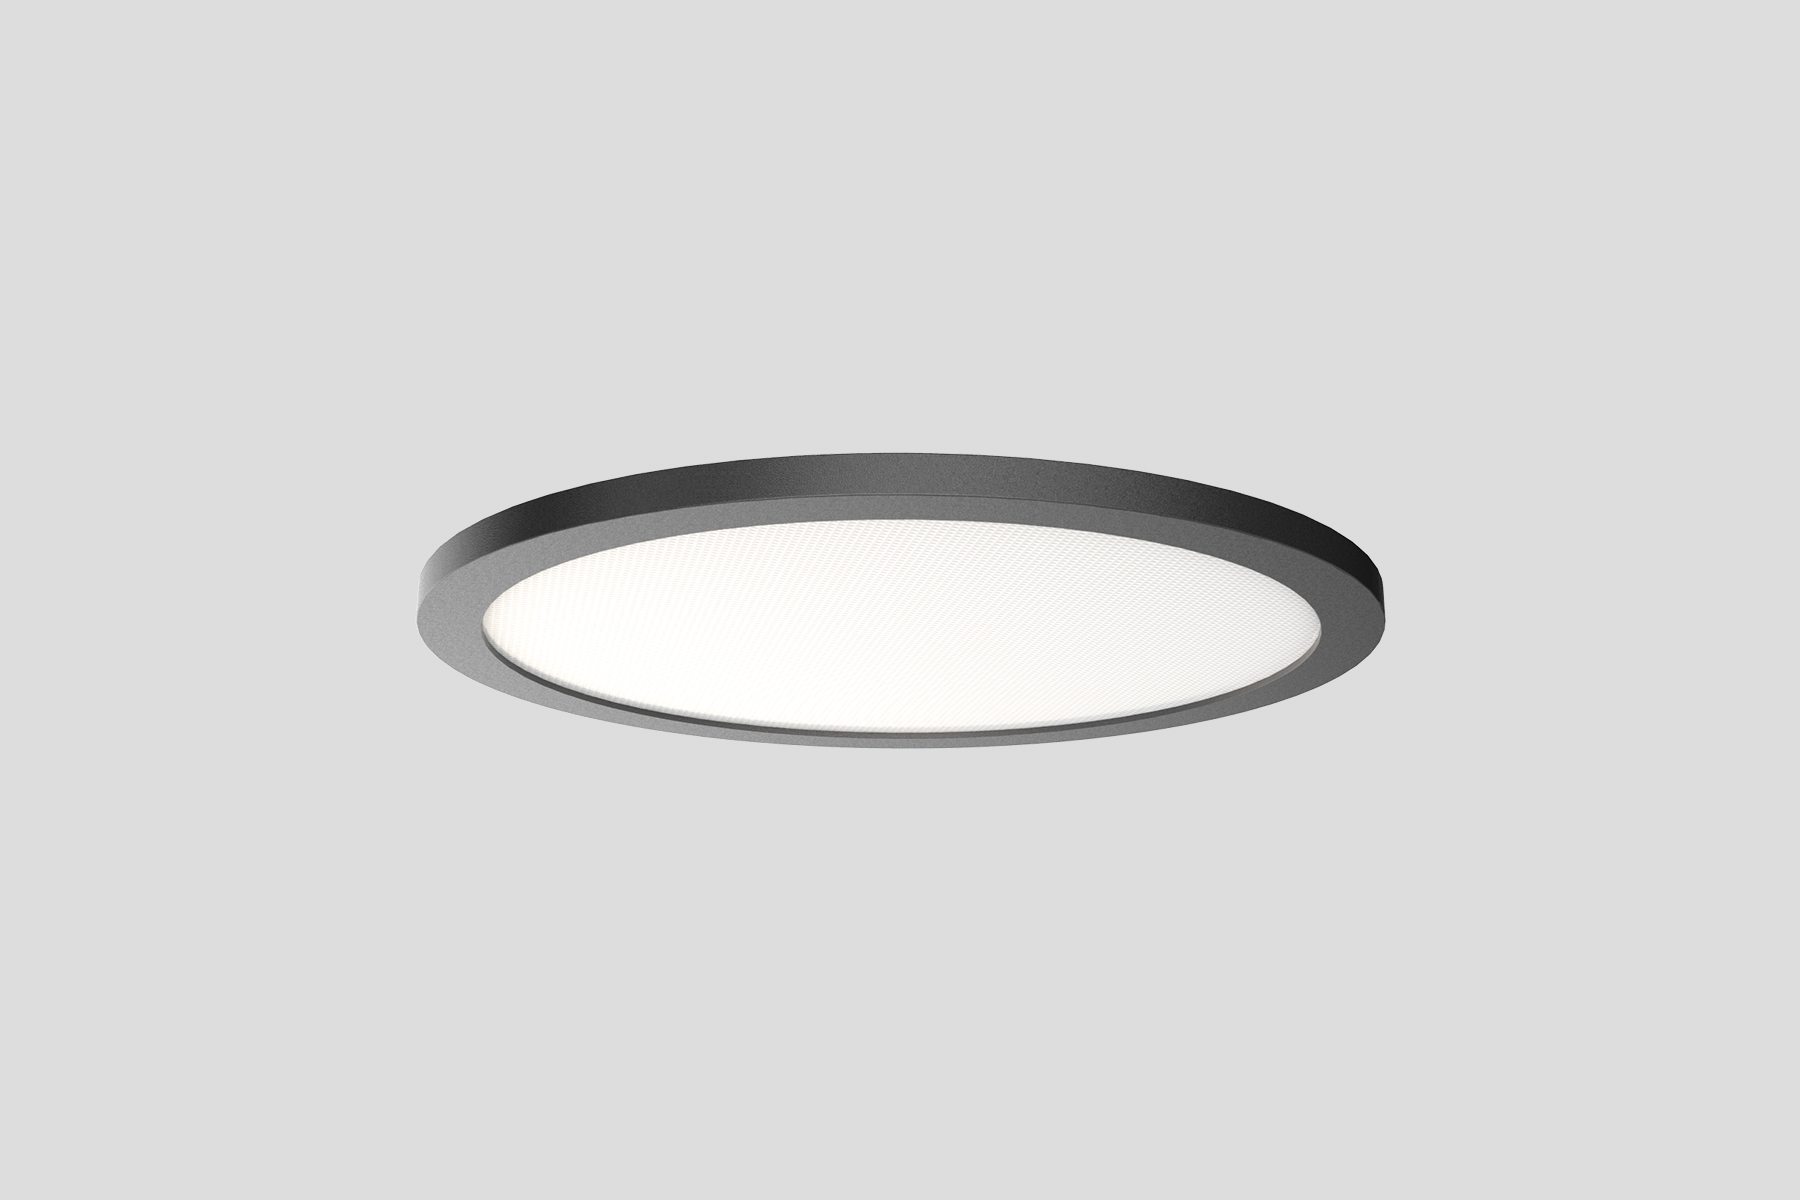 Architectural lighting LED Ceiling Light-FLATIA - Edge-Lit